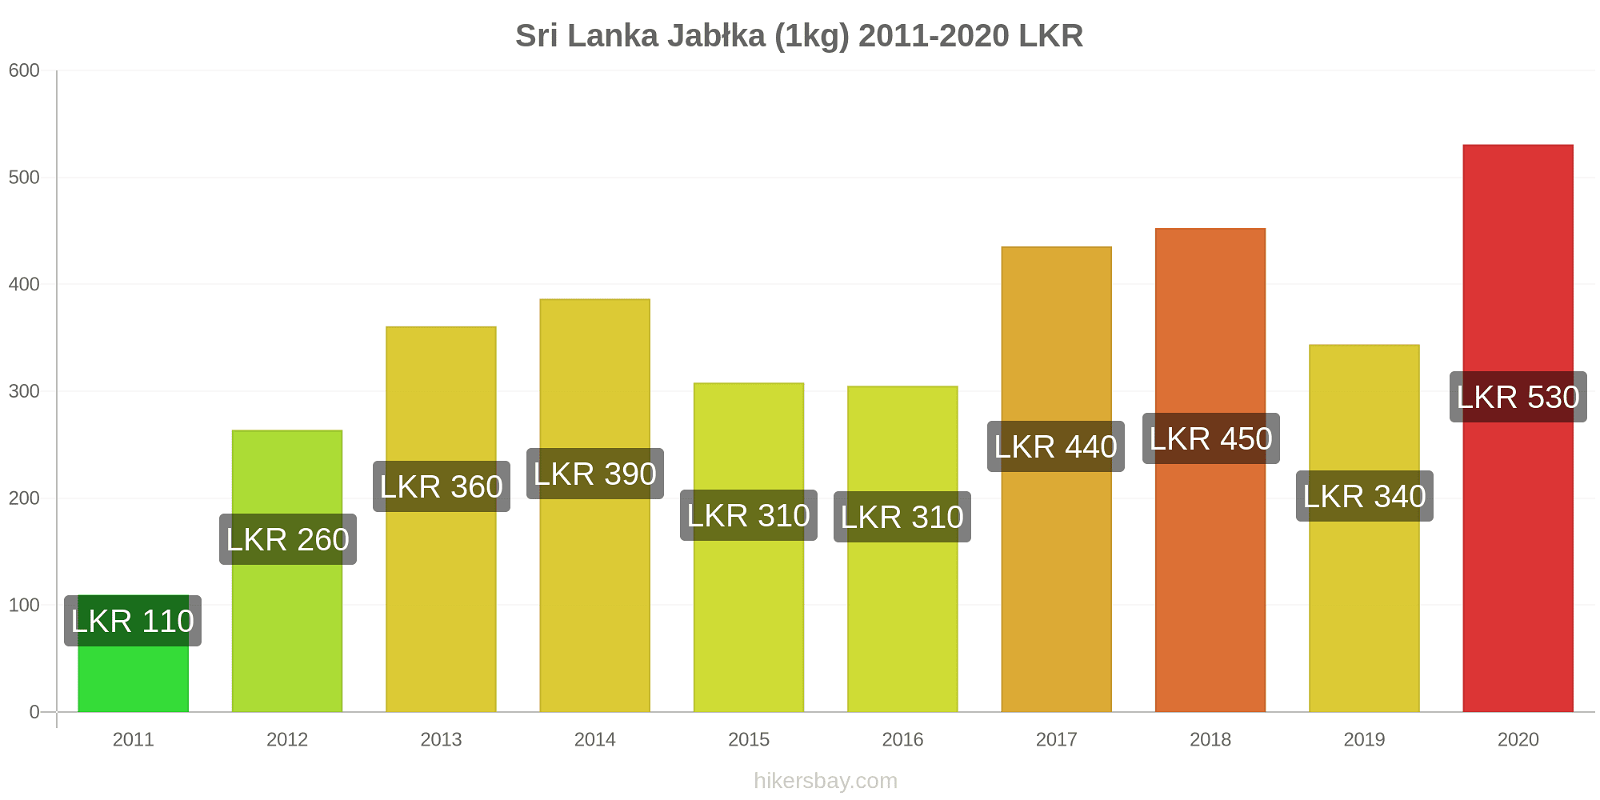 Sri Lanka zmiany cen Jabłka (1kg) hikersbay.com